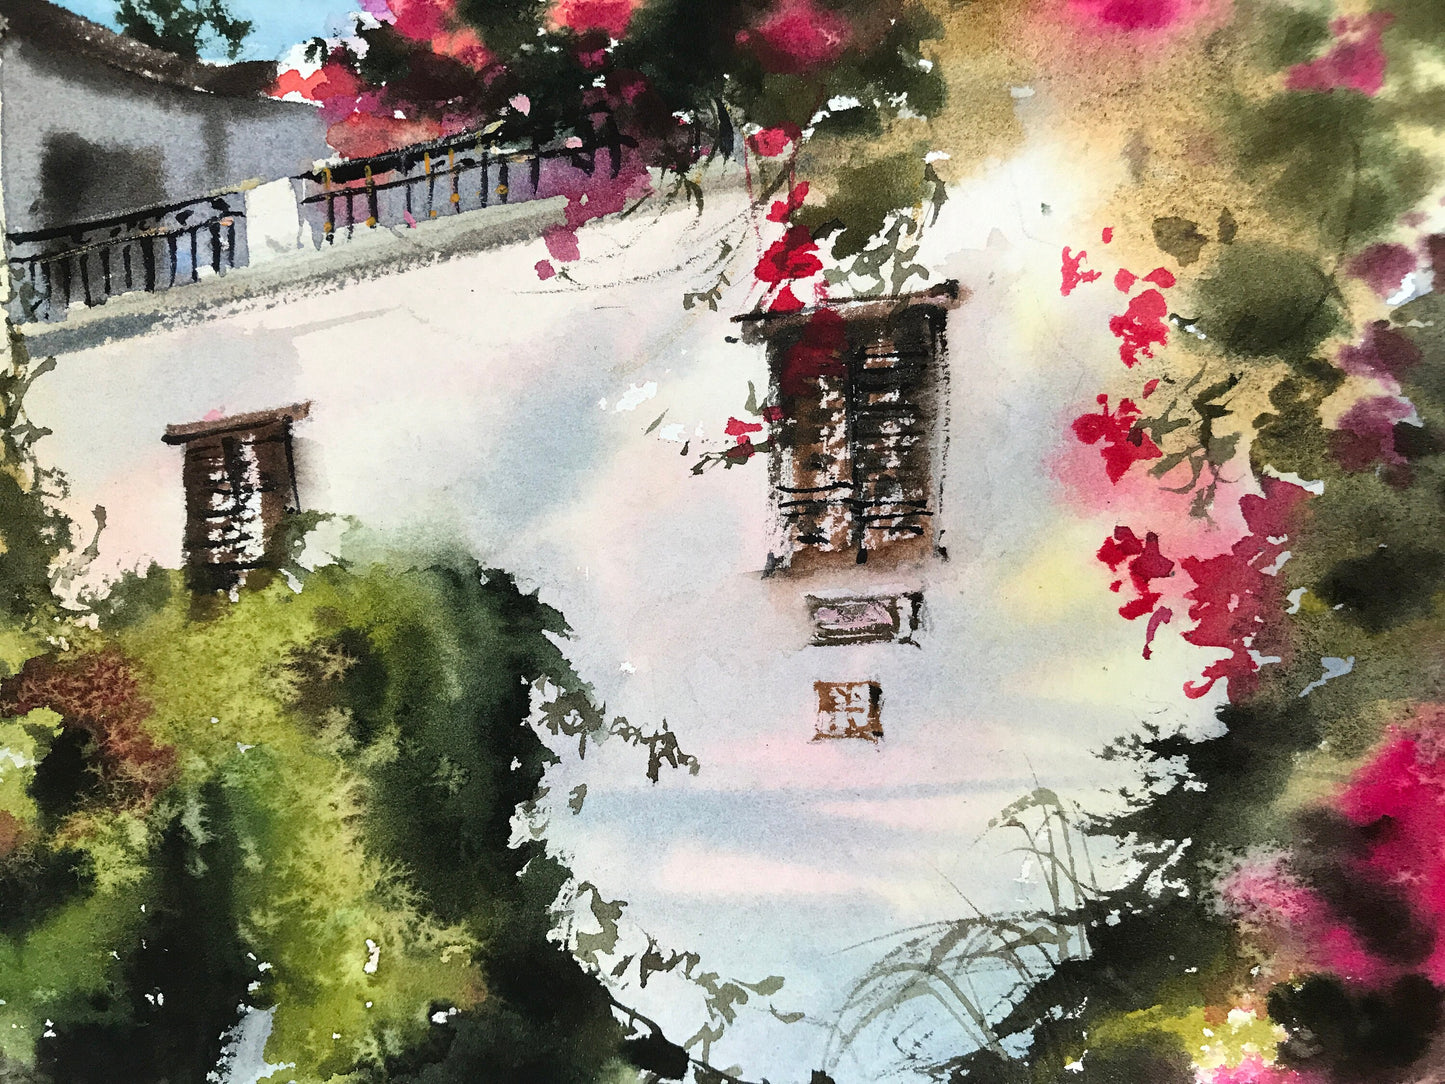 Coastal Village House Painting Original Watercolor, Greek Style Artwork, White, Green, Pink Flowers Wall Decor, Gift